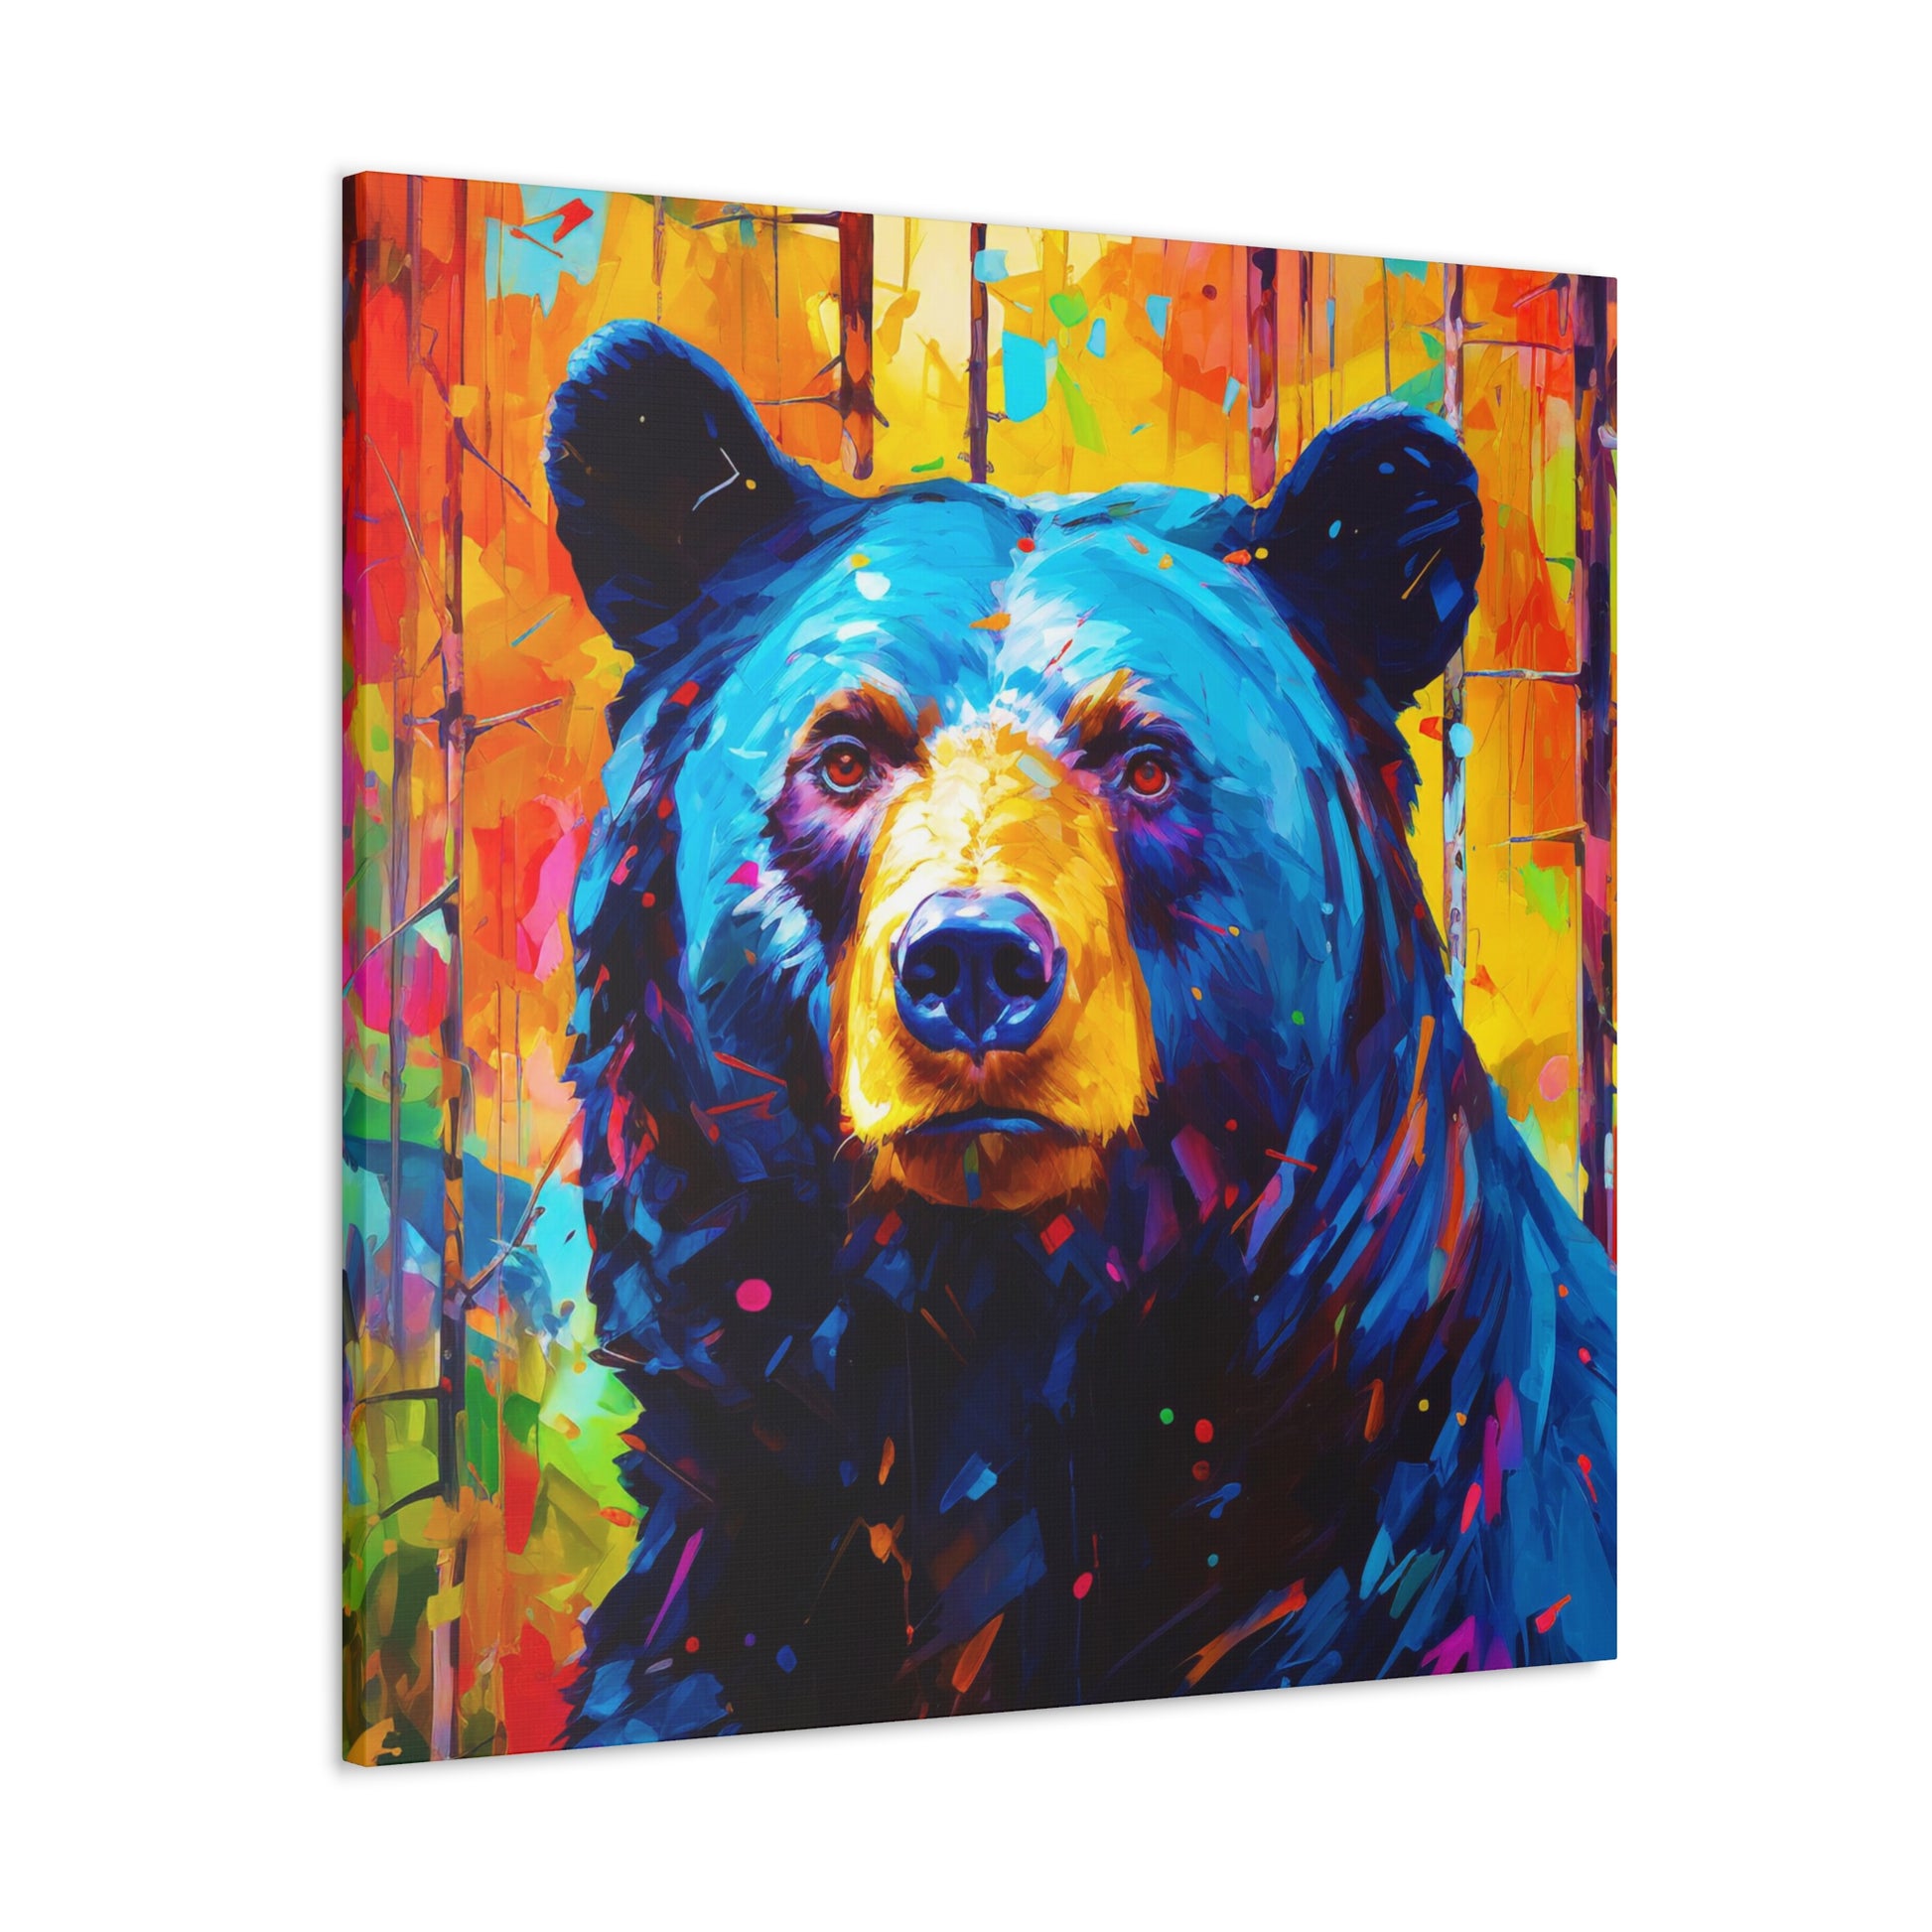 wildlife decor canvas prints, colorful black bear wall decor